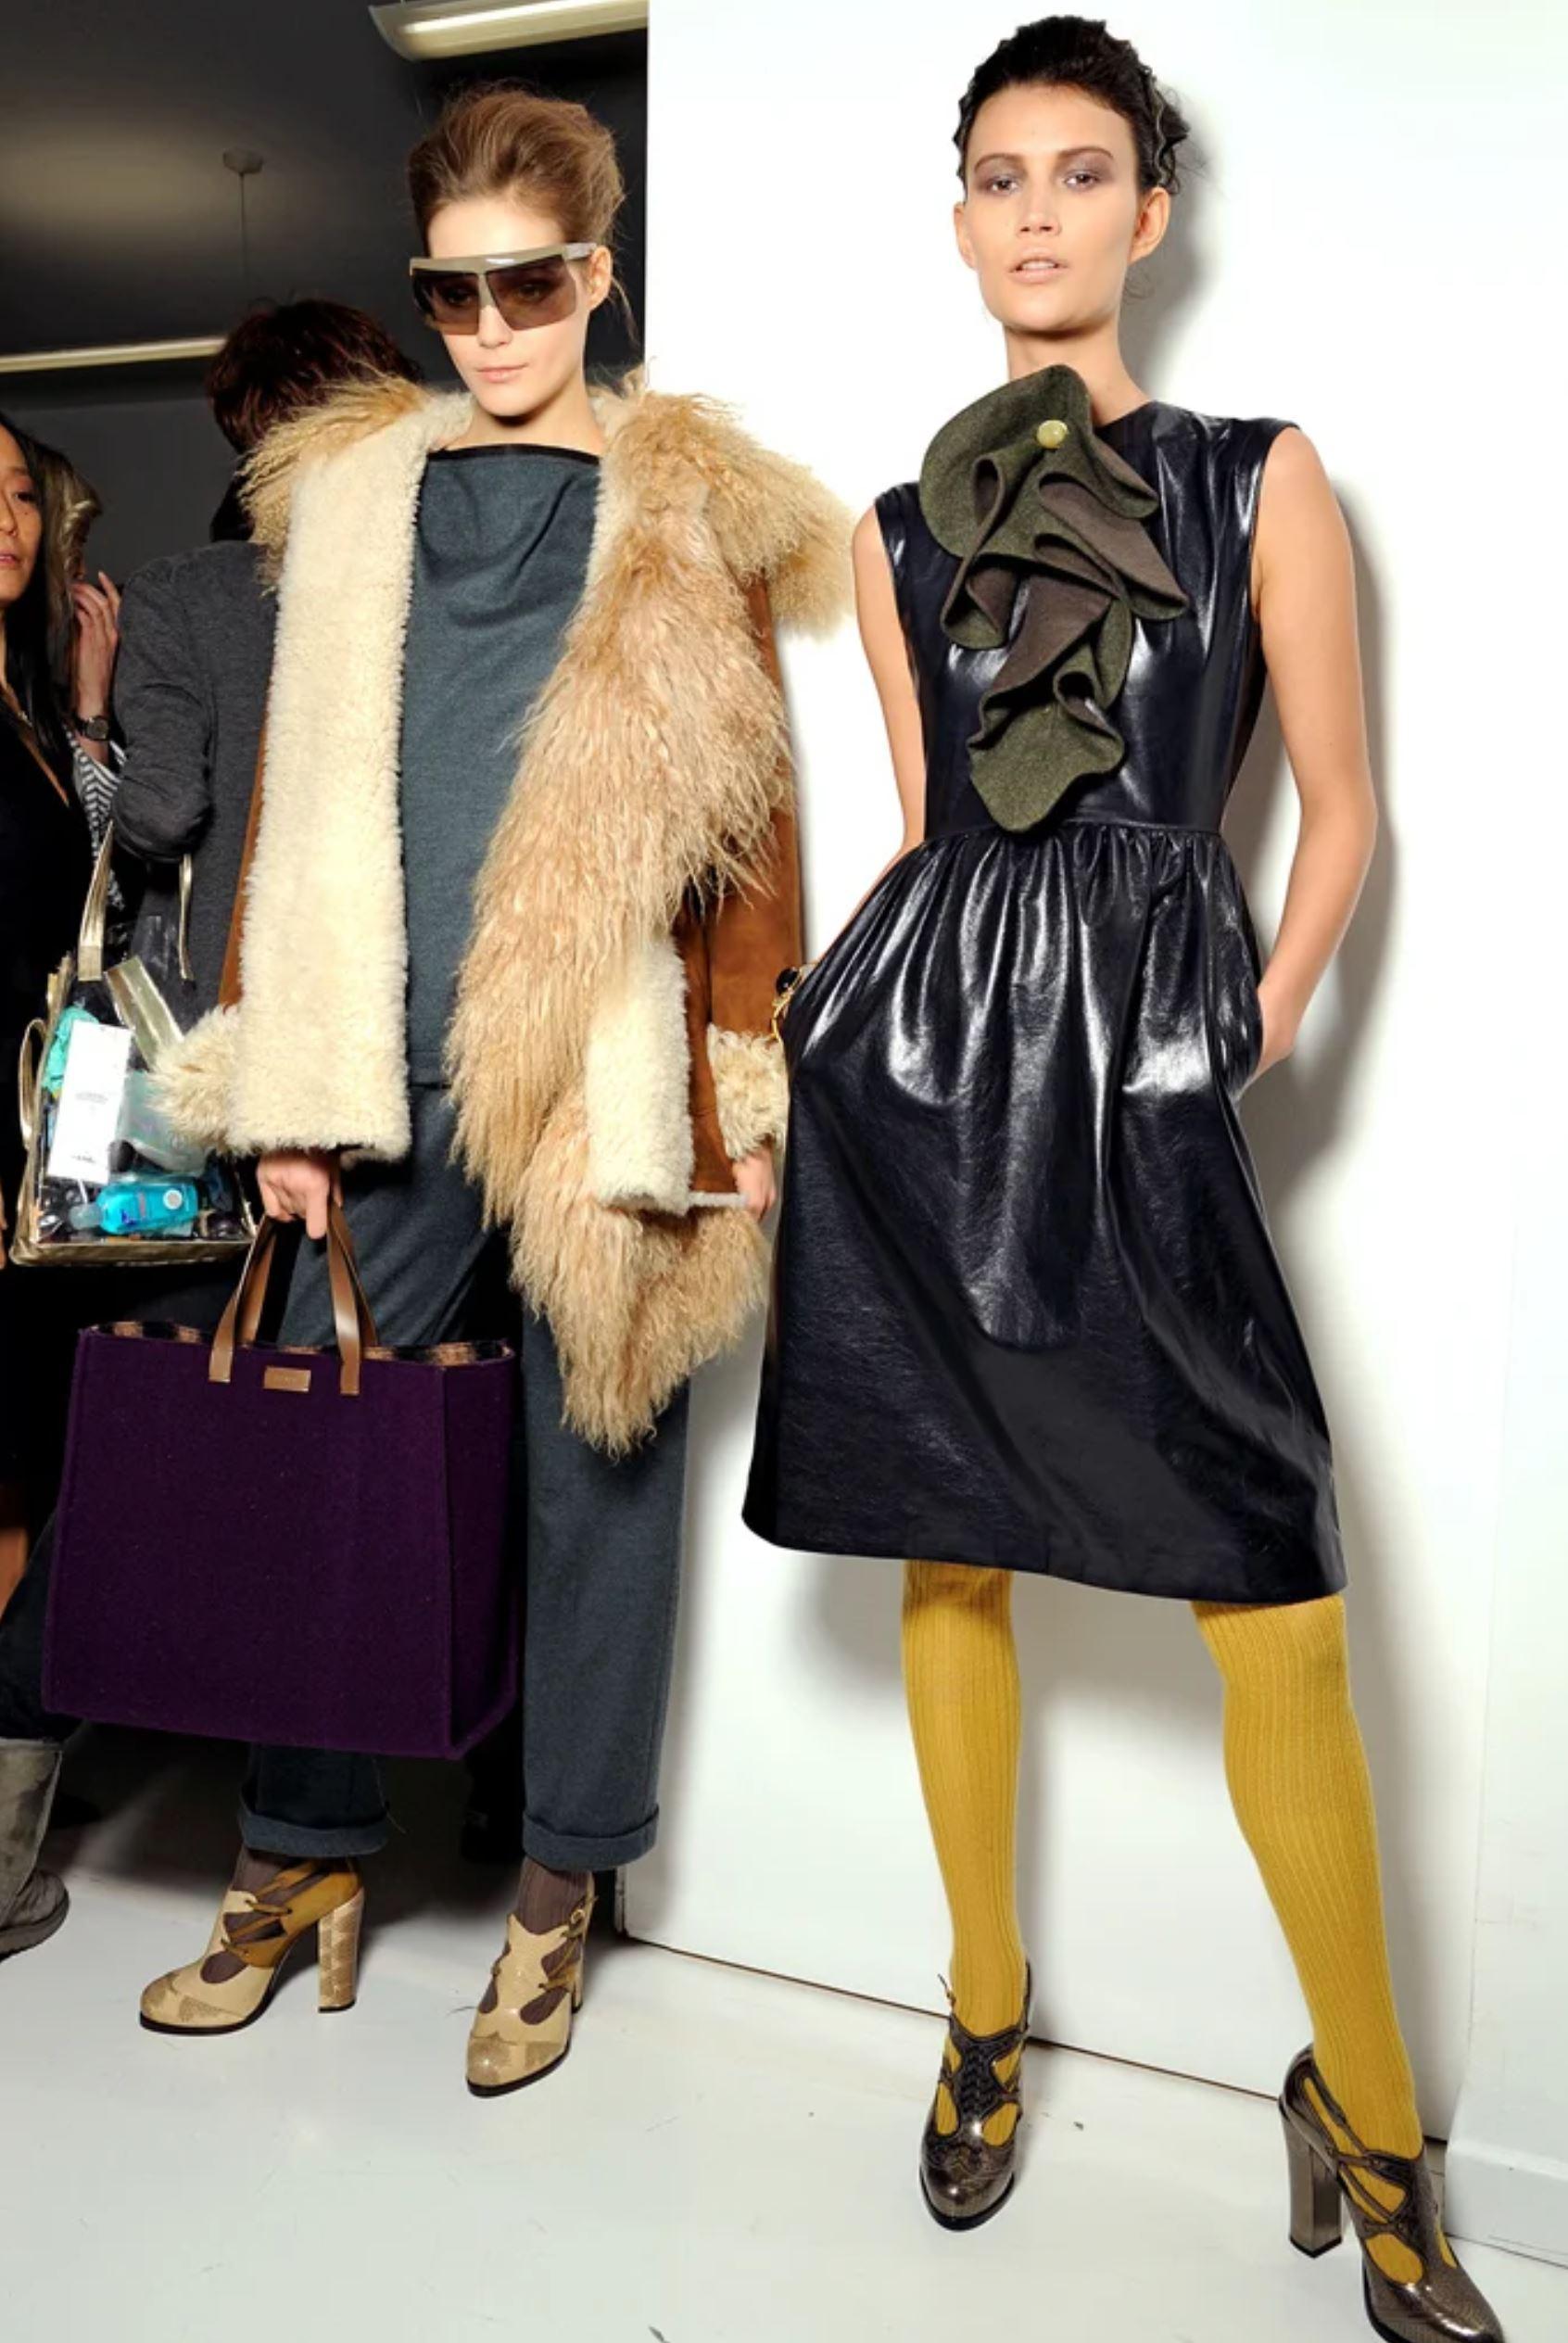 Women's New Fendi Karl Lagerfeld F/W 2011 Leather Platform Pumps Heels Sz 37.5 $1975